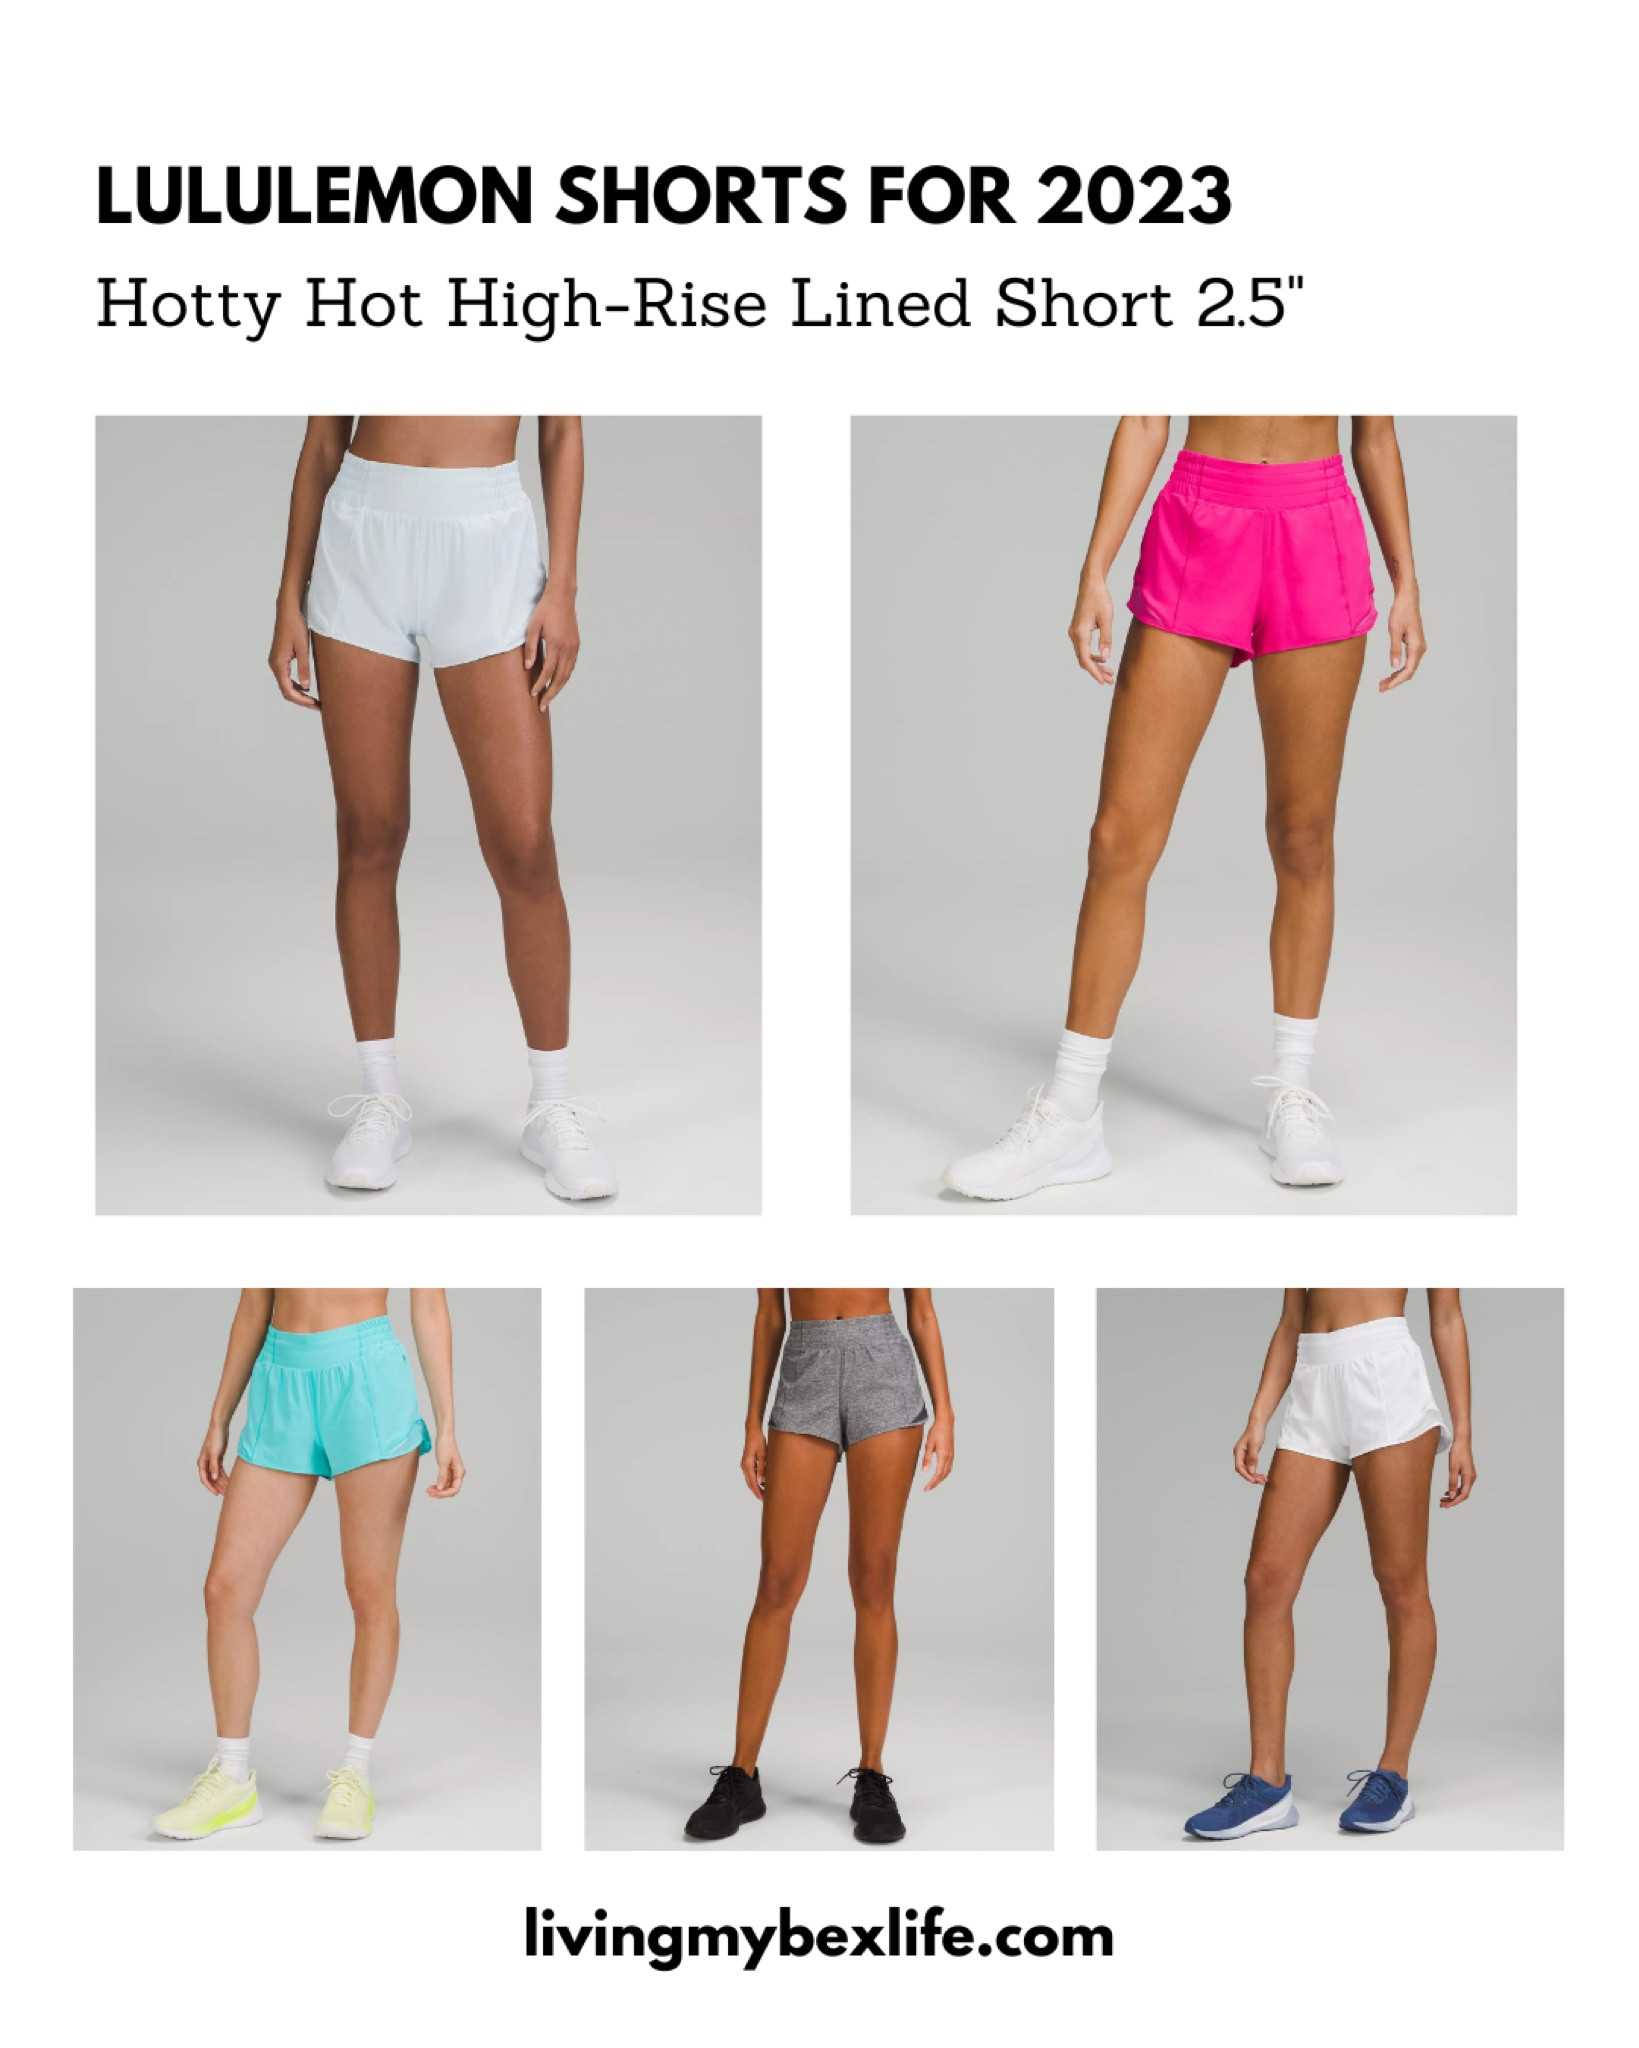 Lululemon Hotty Hot High-Rise Lined Short 2.5 - Strawberry